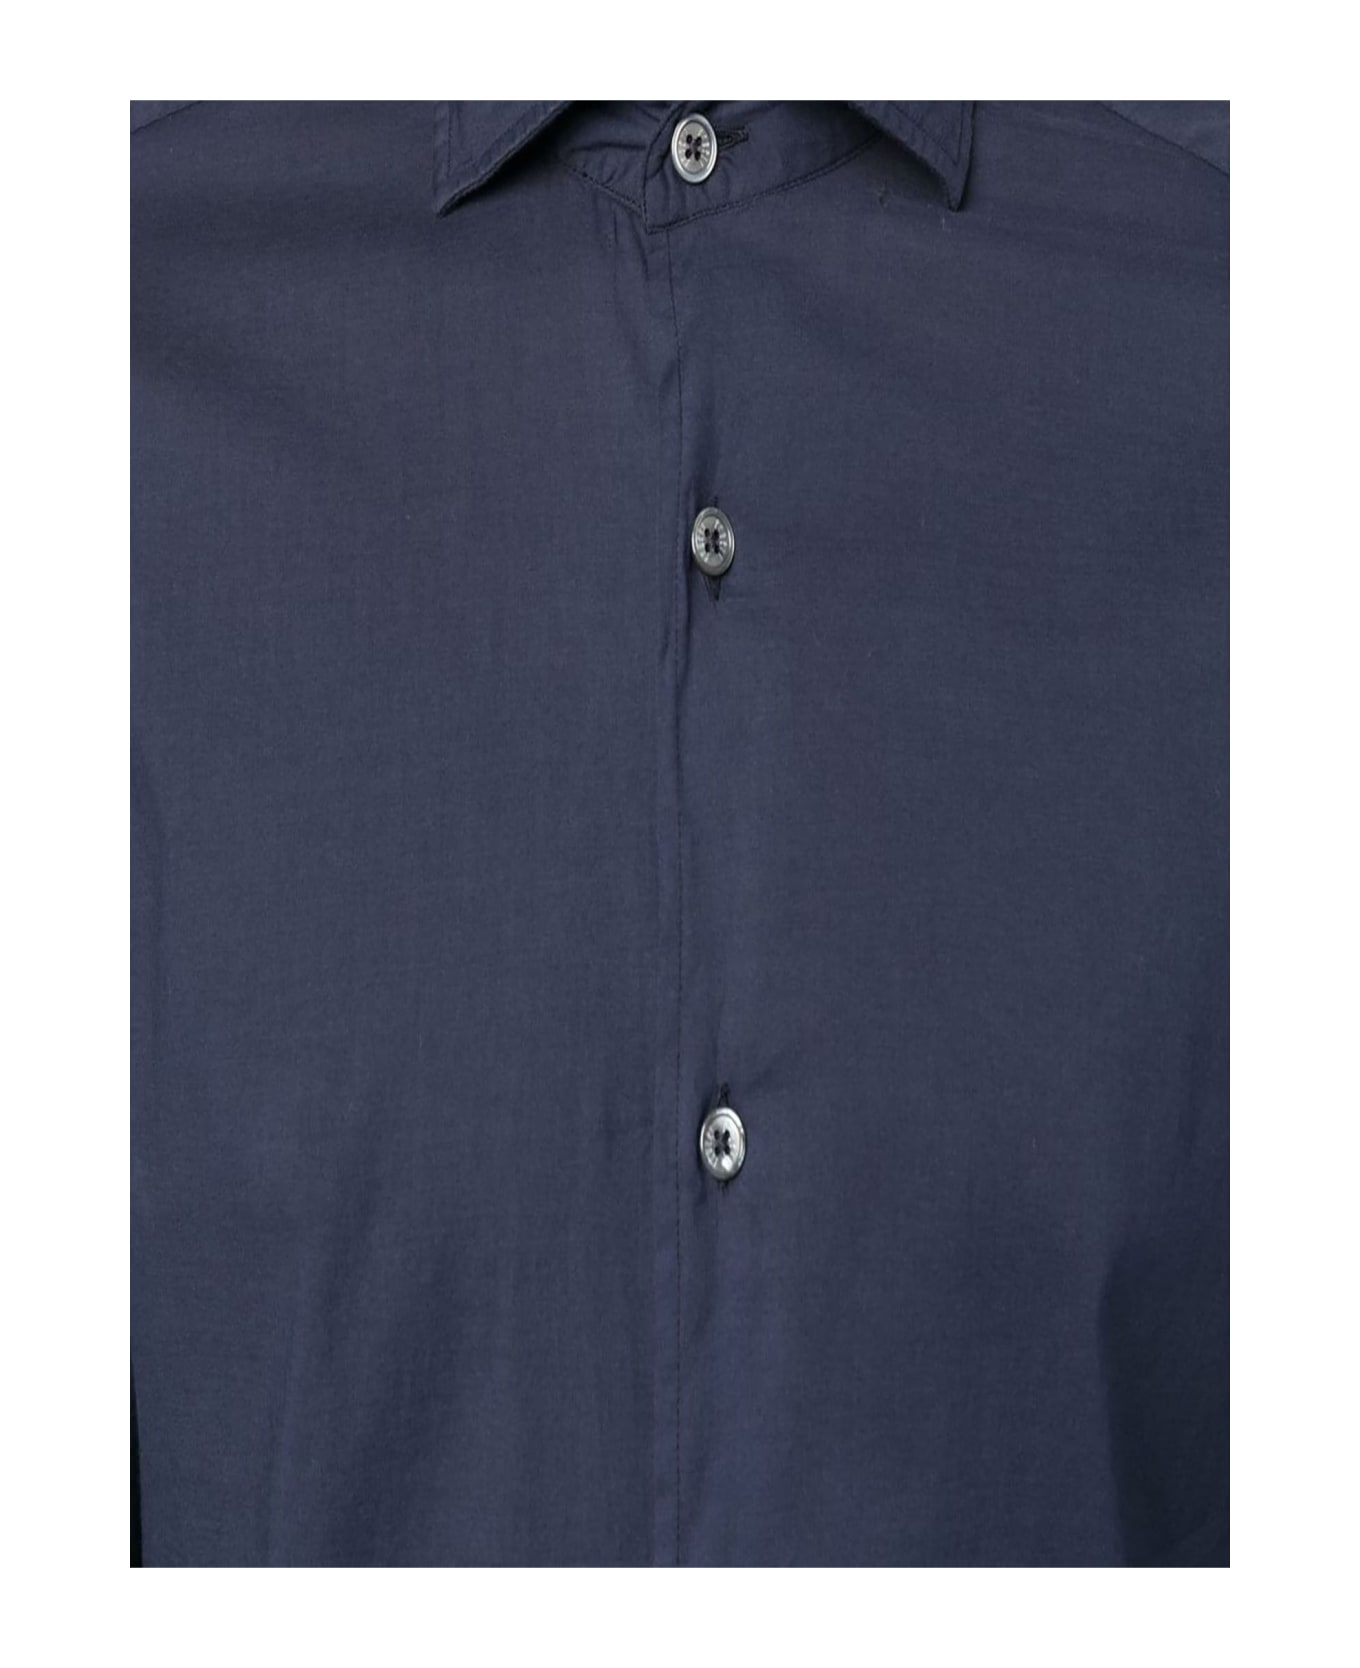 Fedeli Navy Blue Cotton Shirt - Blue